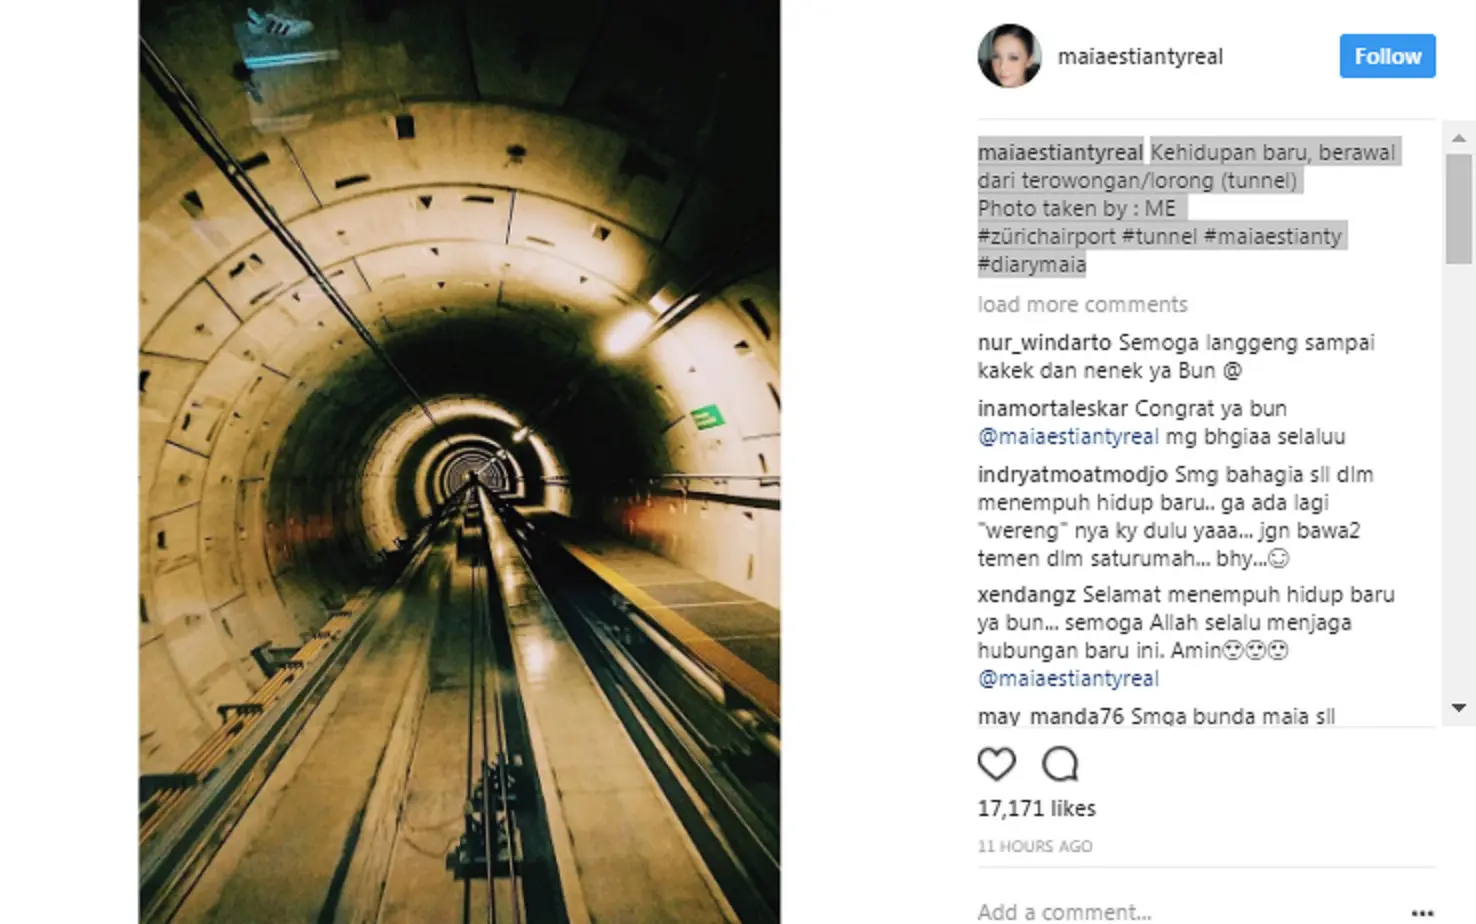 Maia Estianty bicara soal kehidupan baru. (Instagram/maiaestiantyreal)